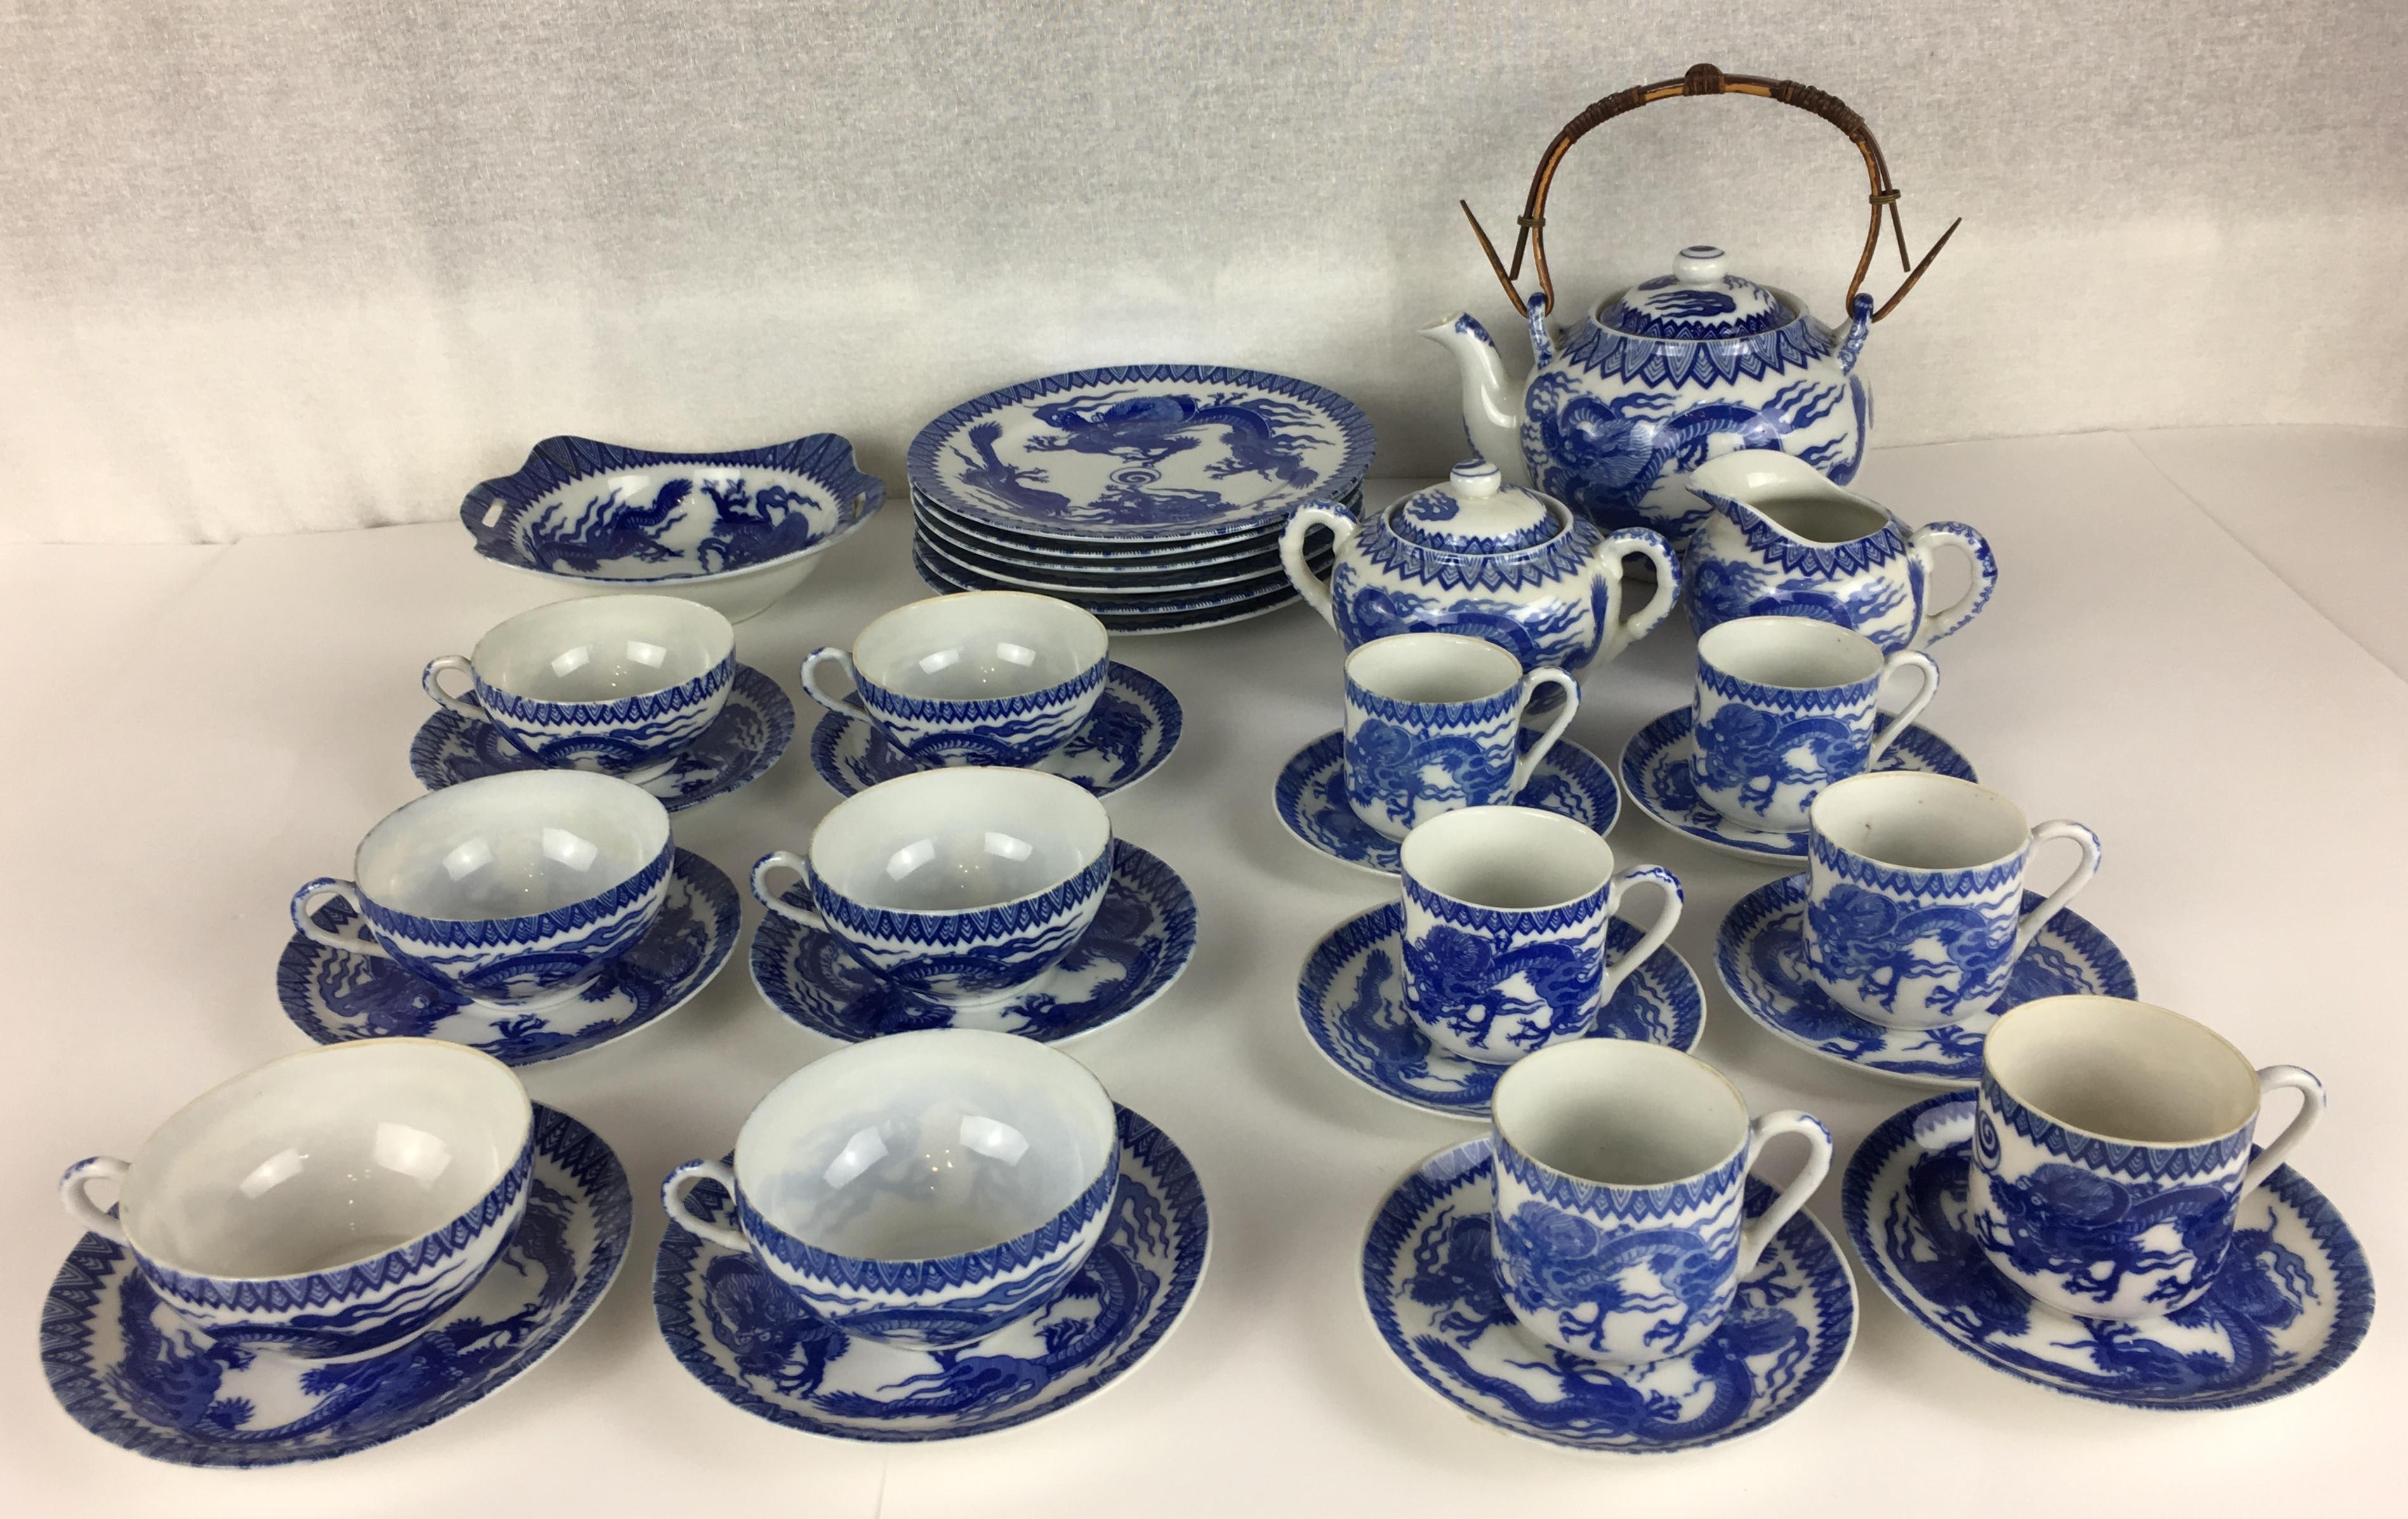 19th Century Japanese Blue and White Arita Porcelain Tea Service, 34 Pieces 1